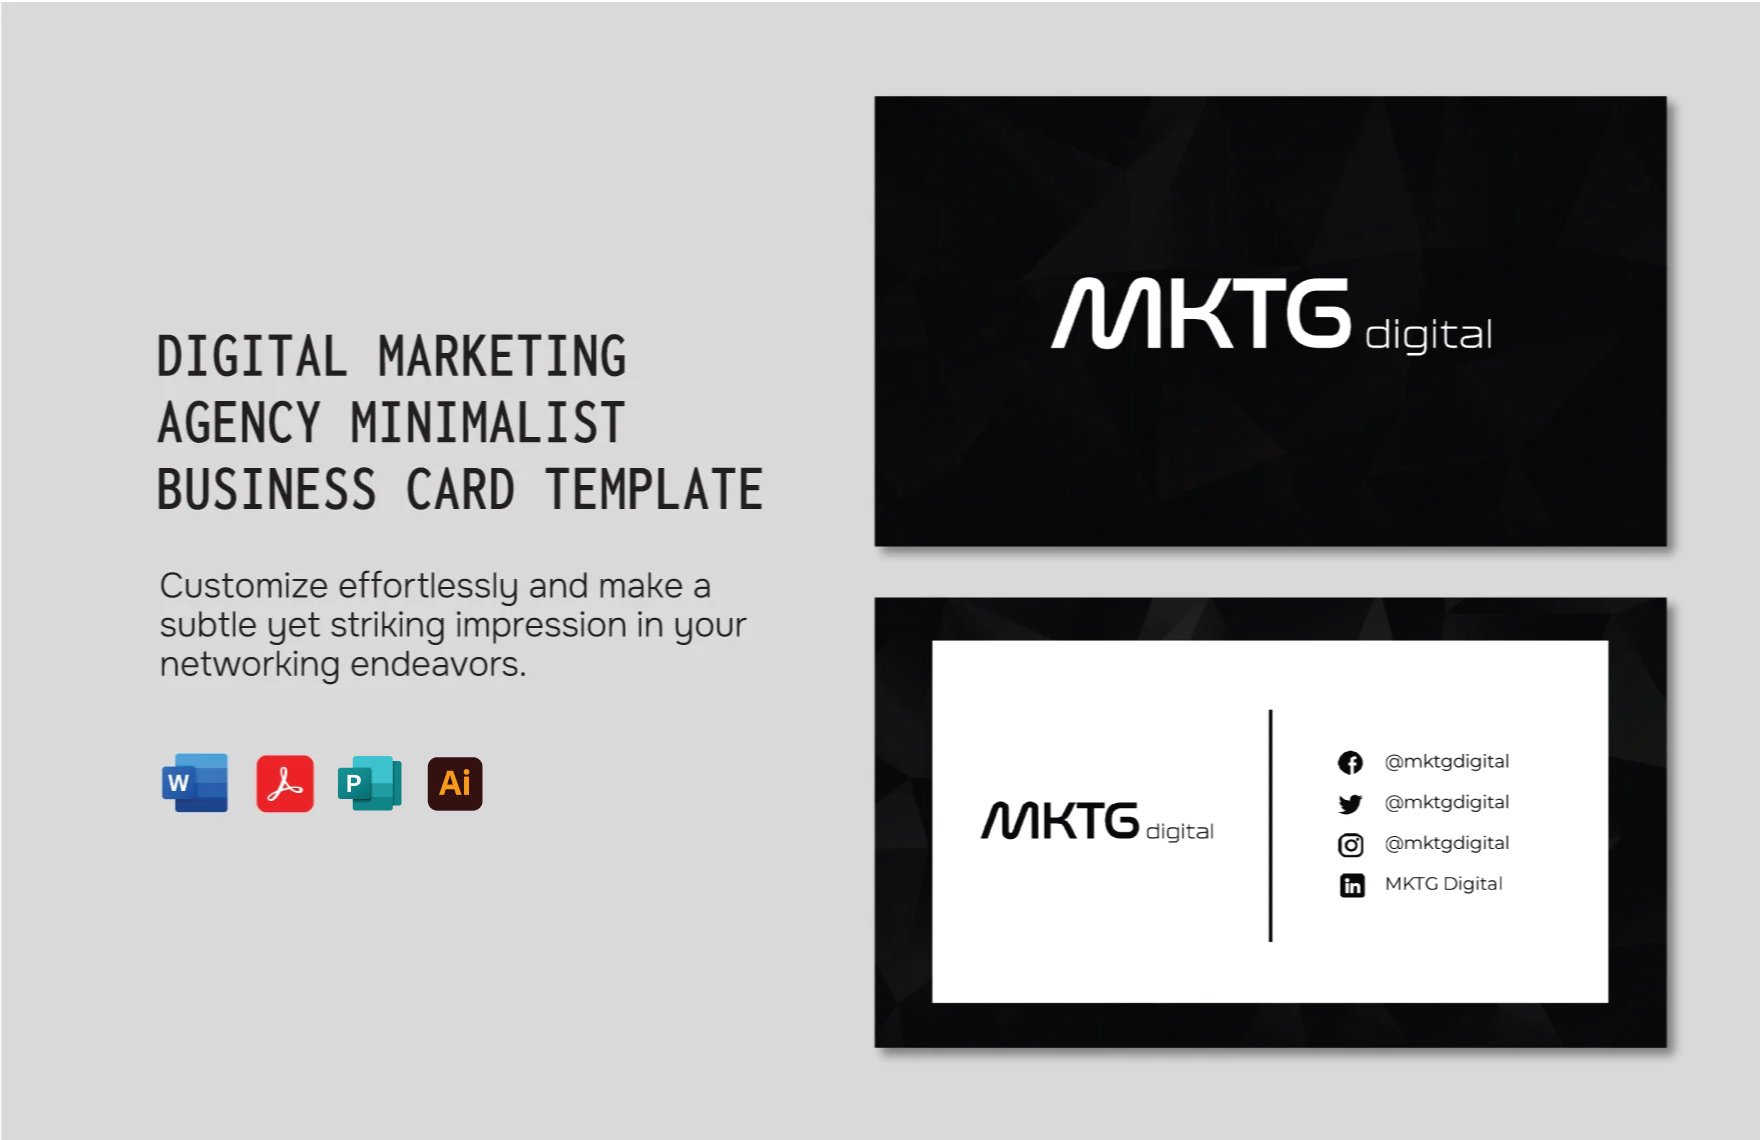 Digital Marketing Agency Minimalist Business Card Template